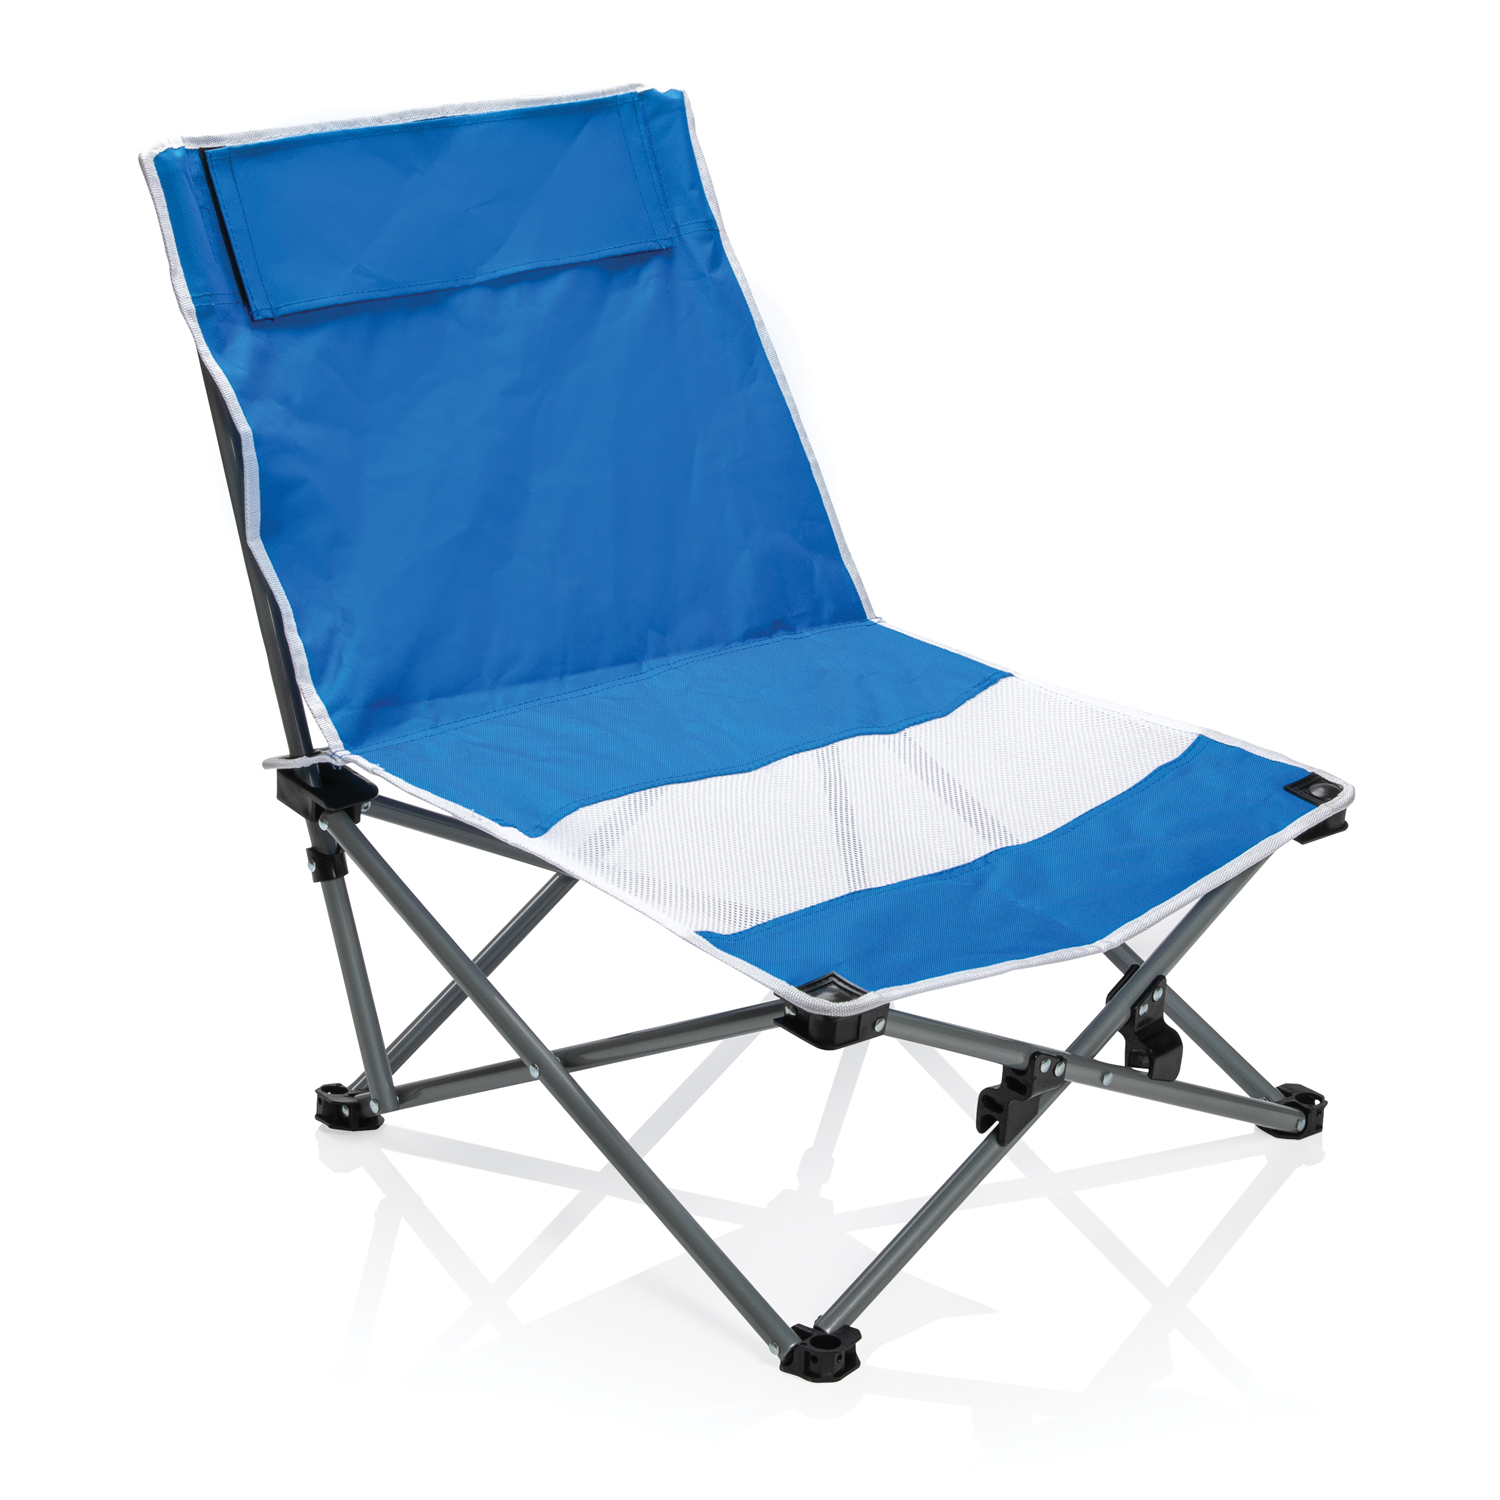 Артикул: XP453.035 — Складное пляжное кресло с чехлом